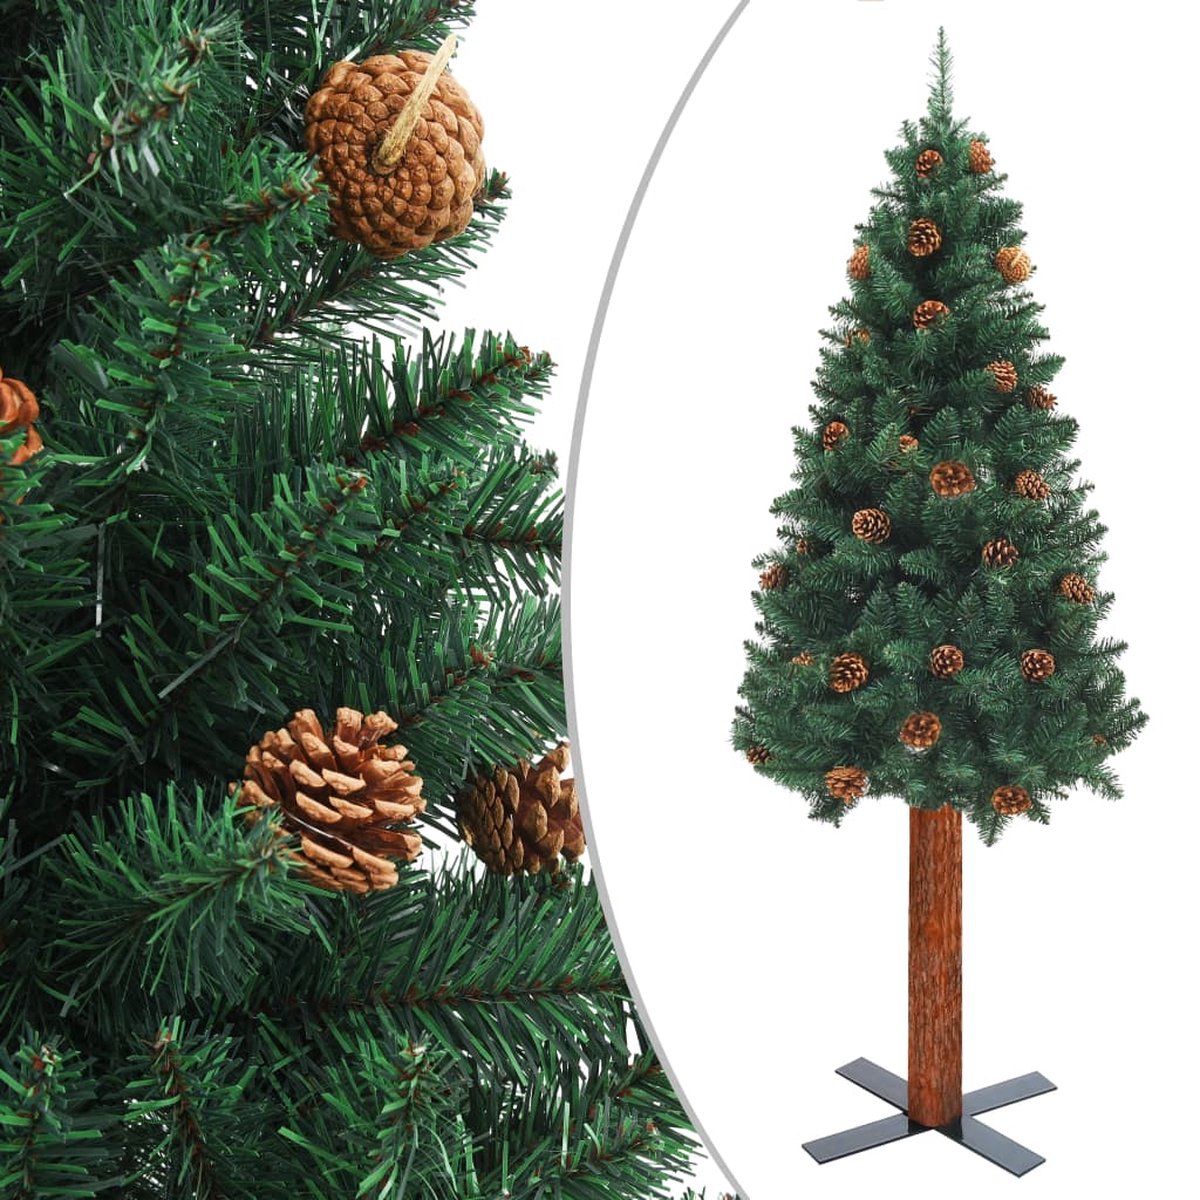 VidaLife Kerstboom met echt hout en dennenappels smal 210 cm PVC groen